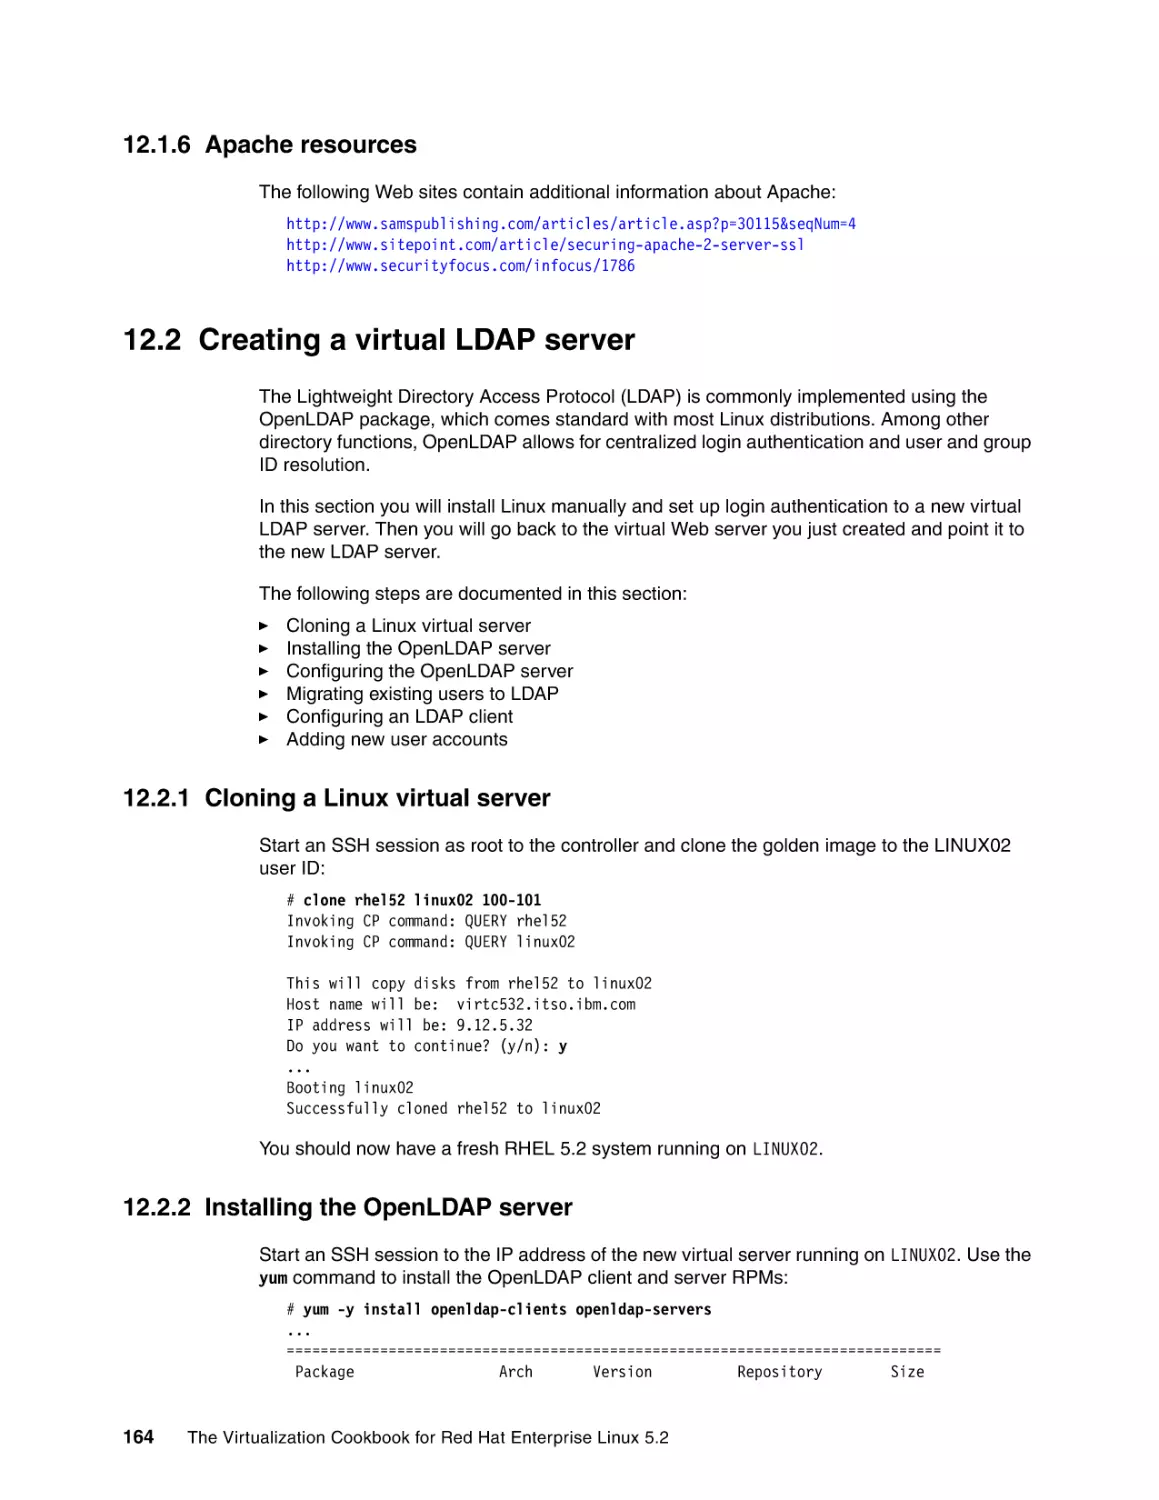 12.1.6 Apache resources
12.2 Creating a virtual LDAP server
12.2.1 Cloning a Linux virtual server
12.2.2 Installing the OpenLDAP server